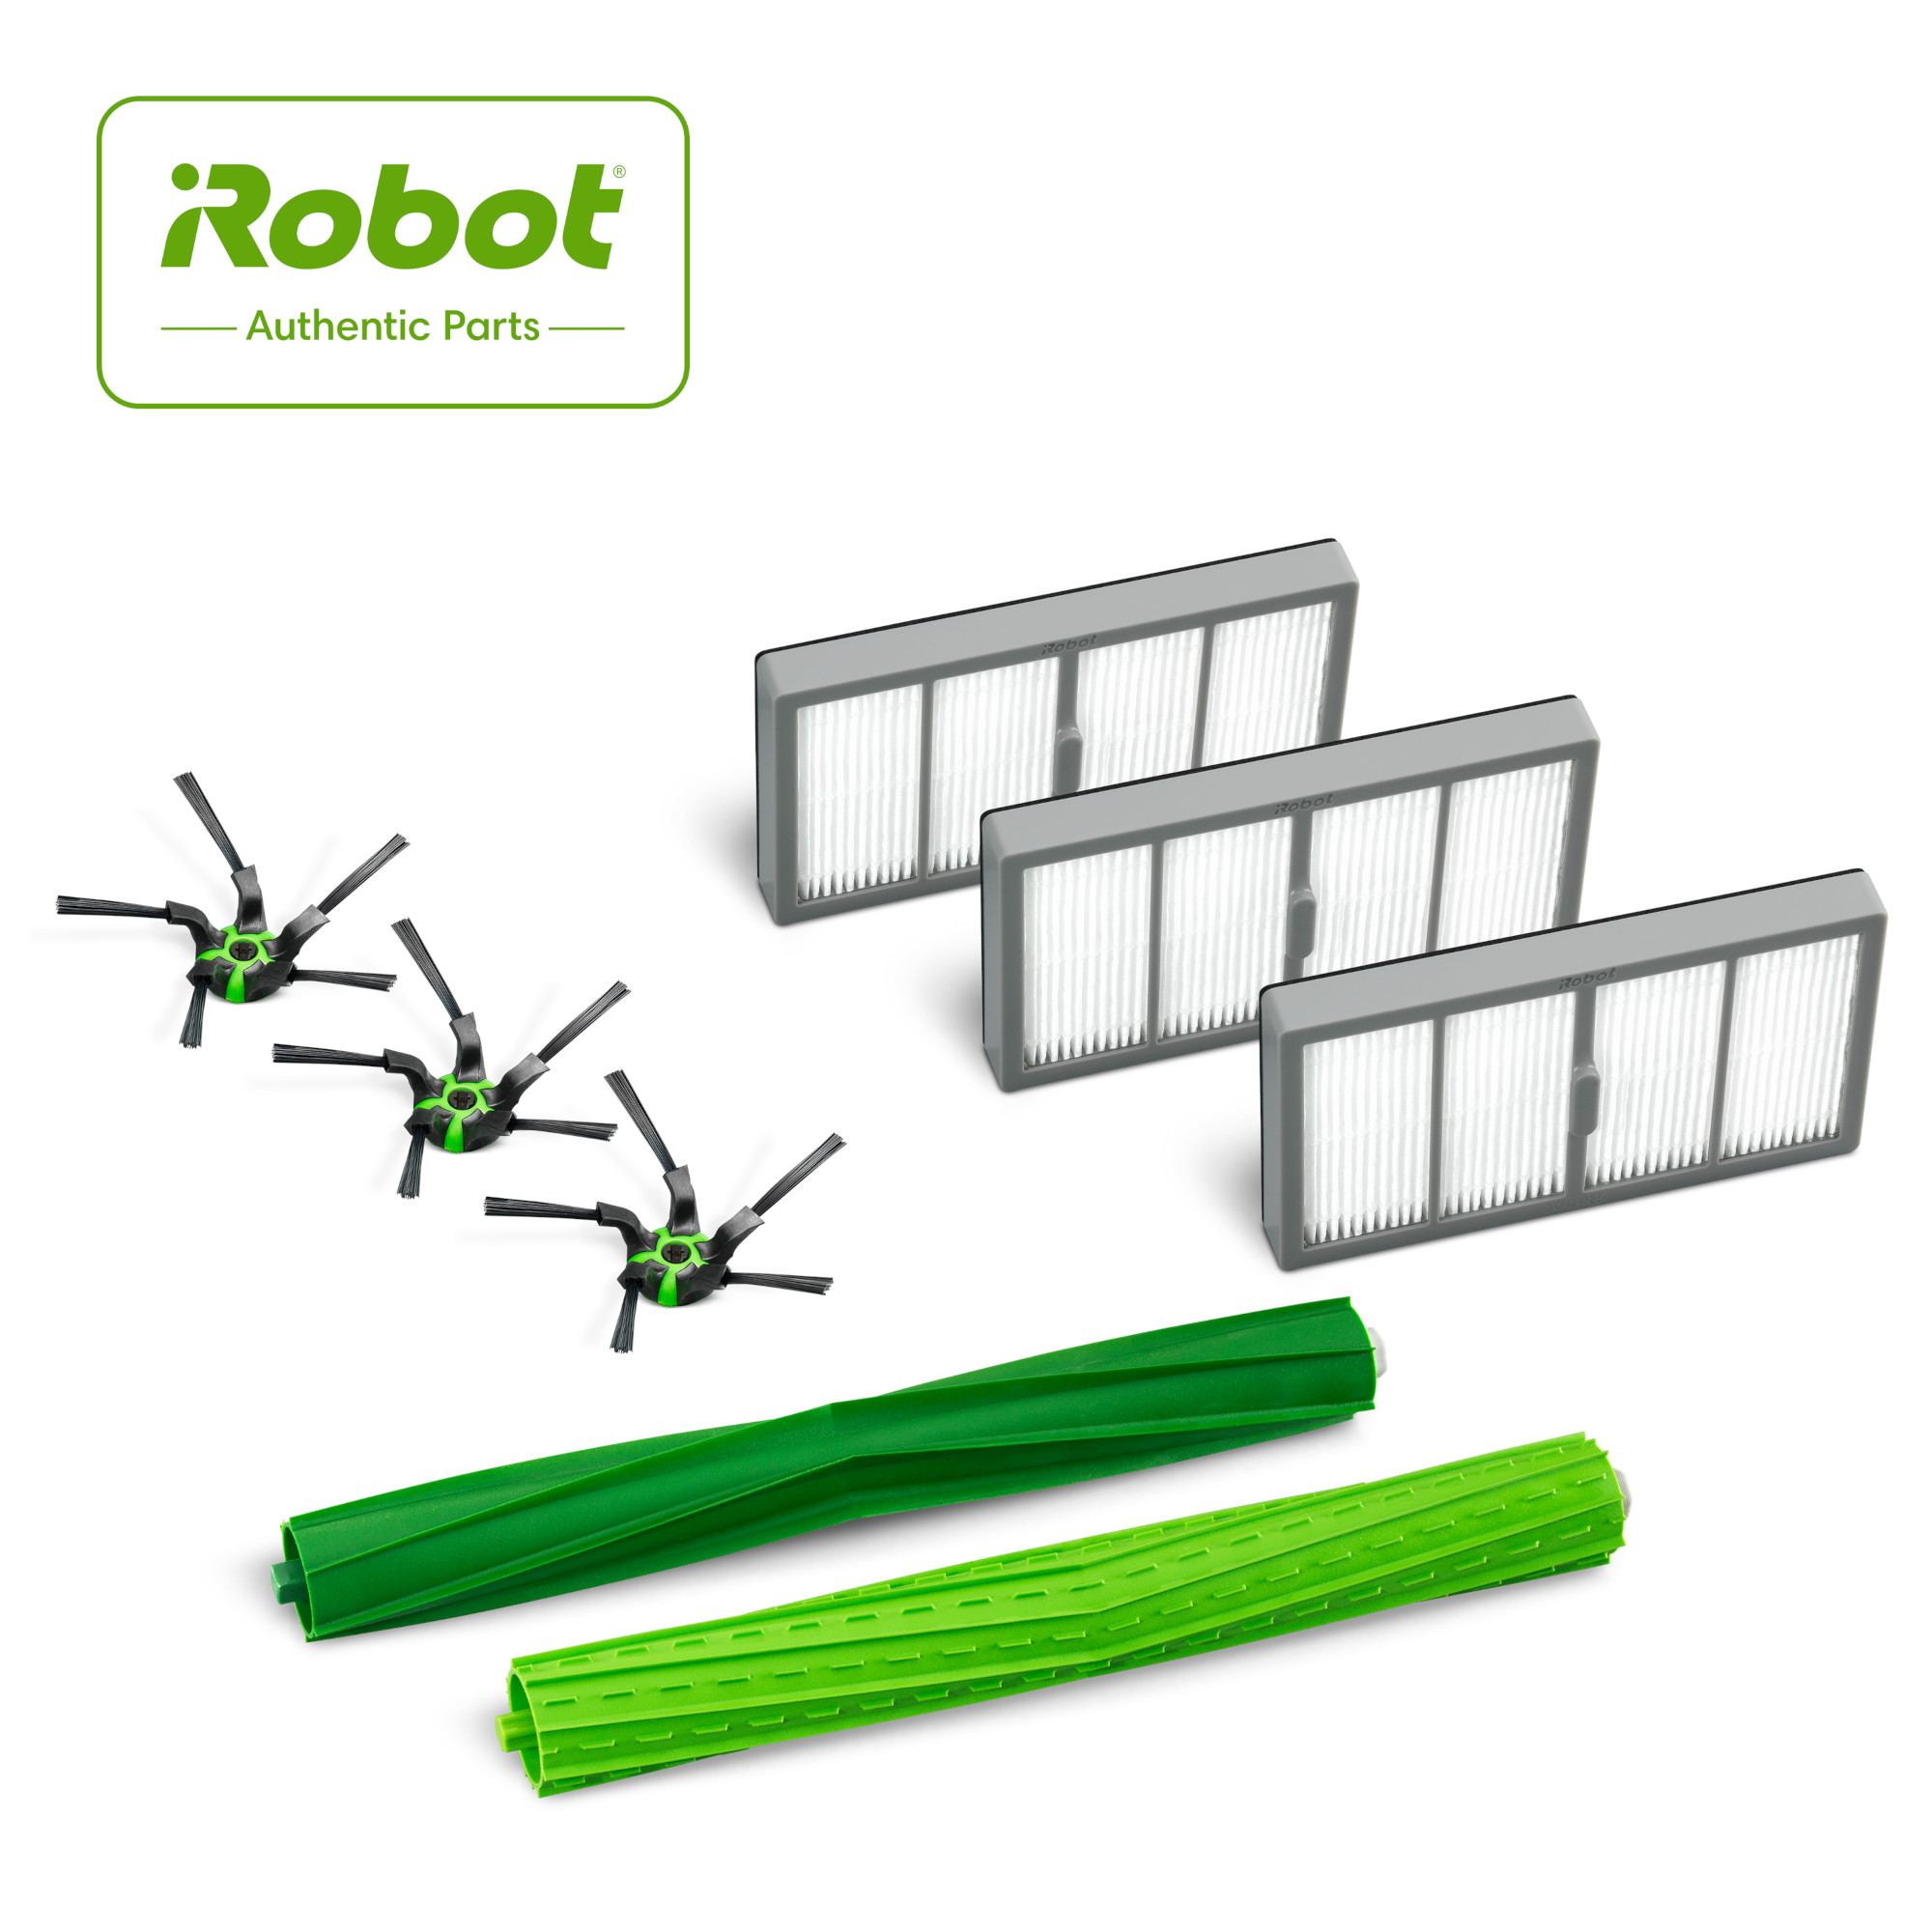 Kit de recambios para las series i y e, iRobot®